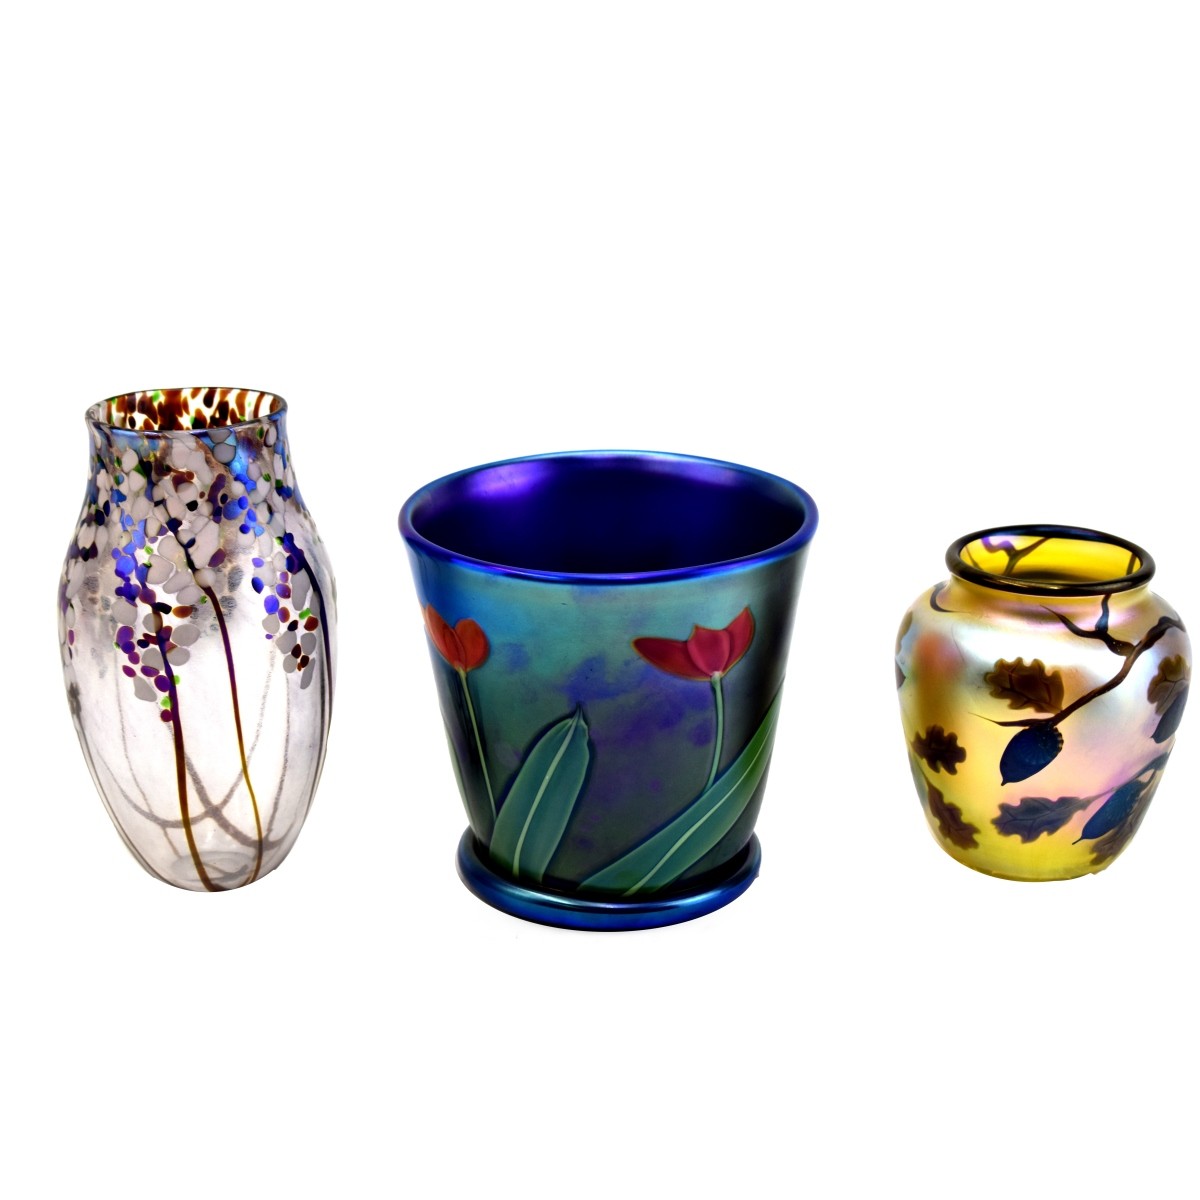 Vintage Art Glass Vases